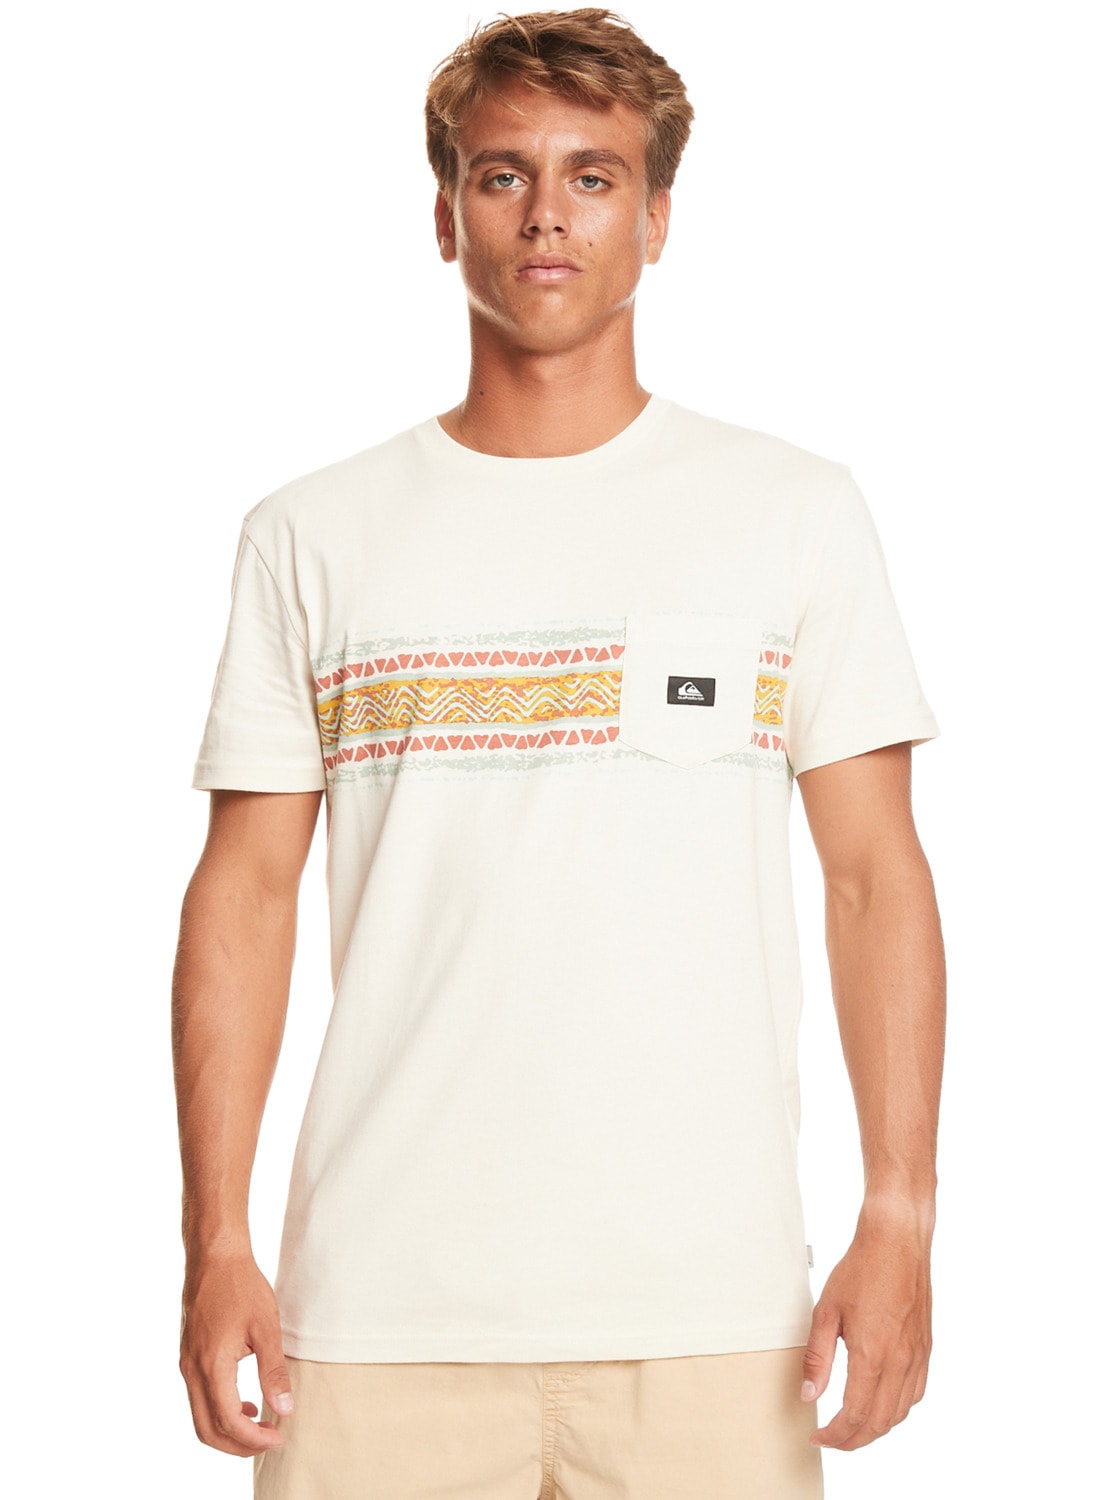 bestellen T-Shirt online »Mesa Stripe« bei Quiksilver OTTO